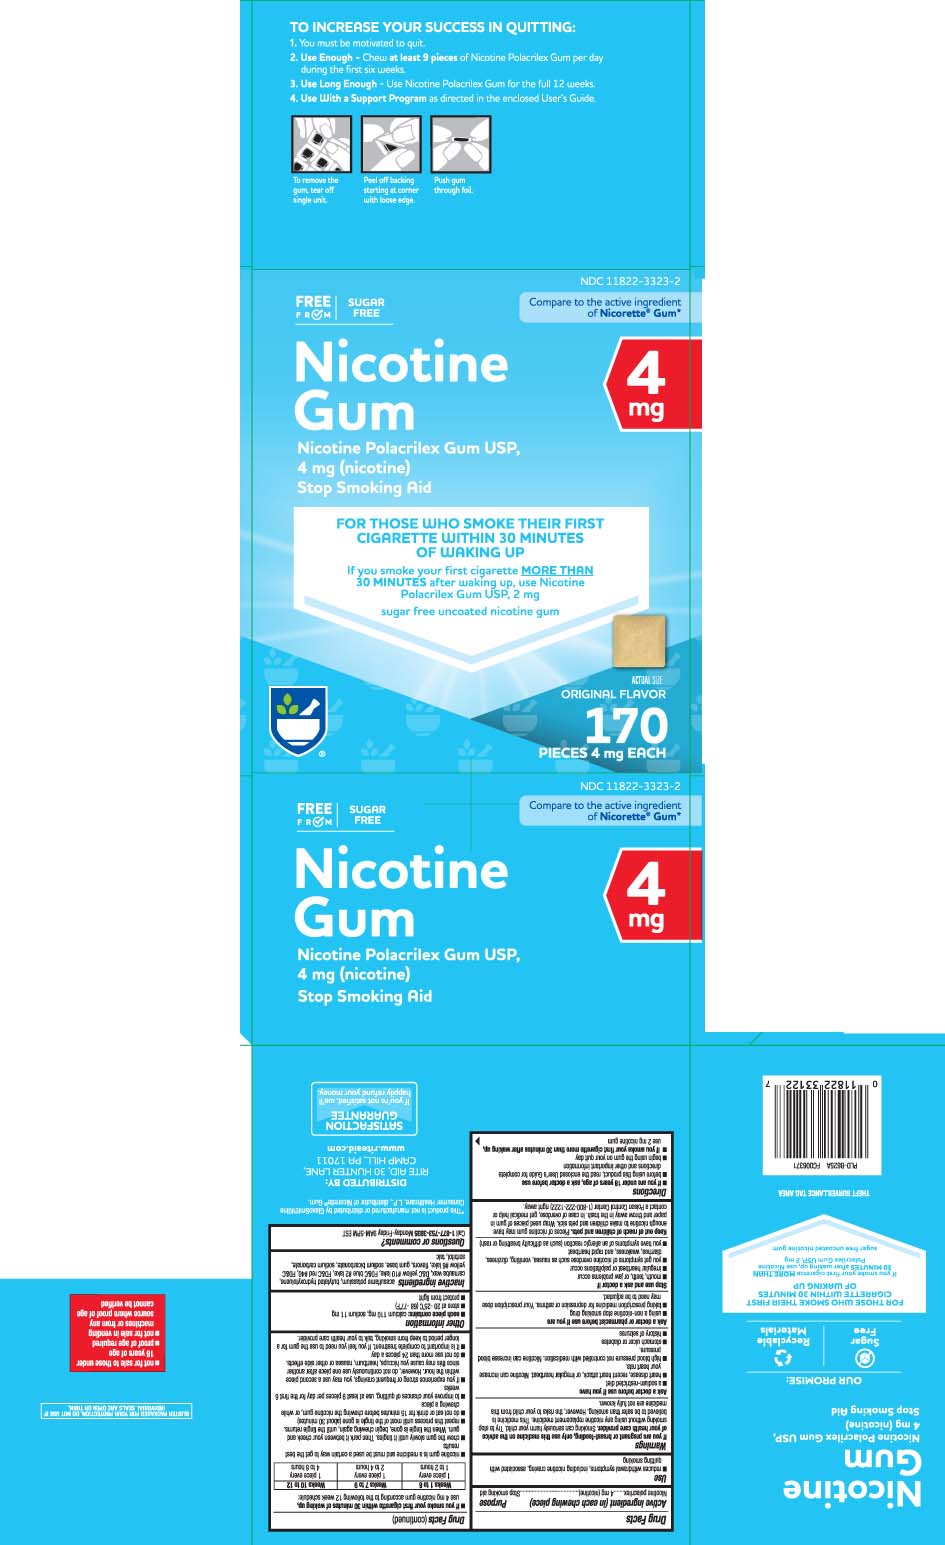 Nicotine Polacrilex 4 mg (nicotine)